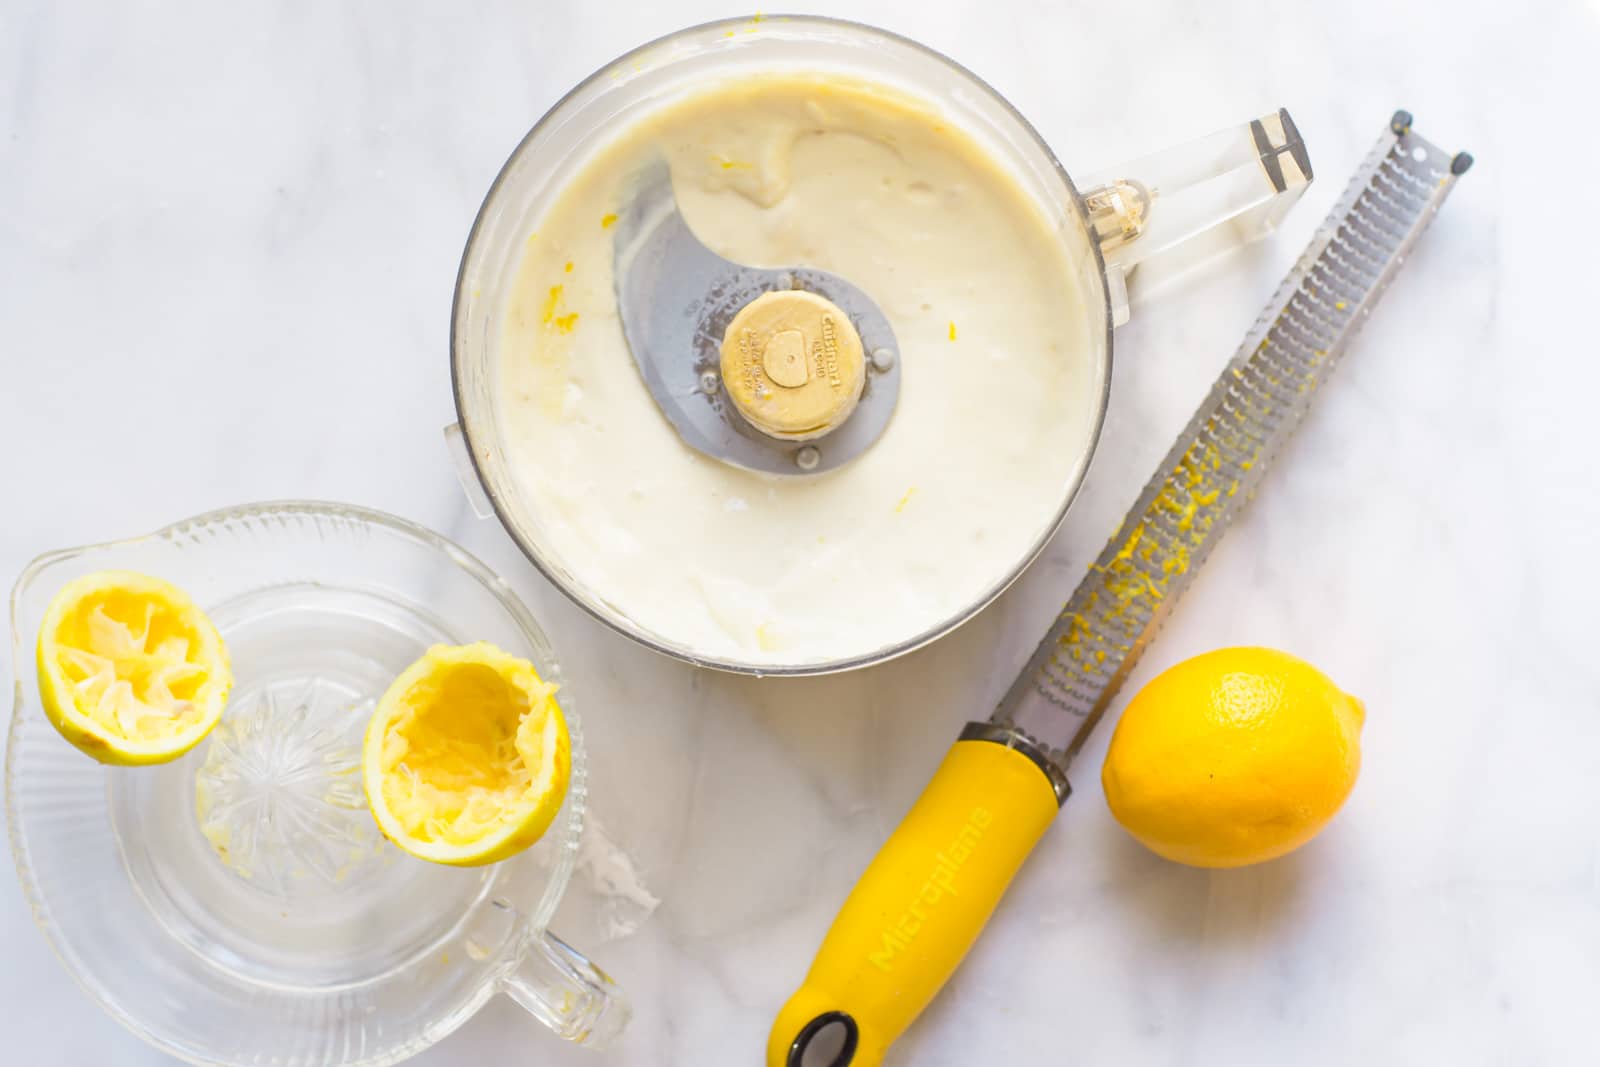 Overhead view of a food processor bowl containing meringue, a lemon, lemon zester and juicer.